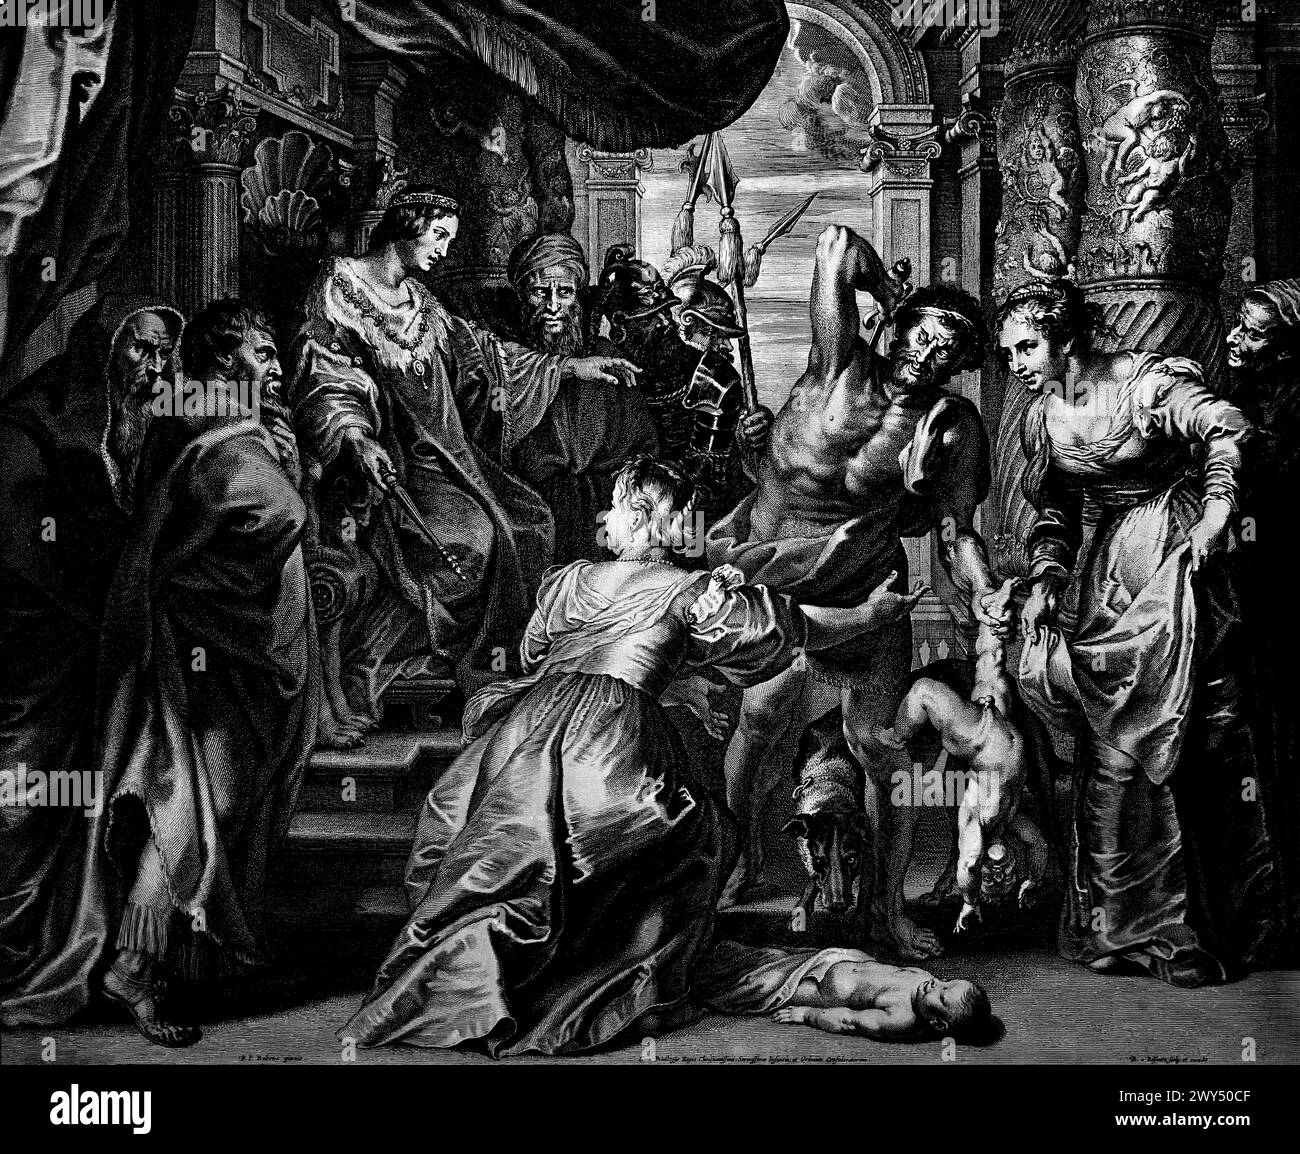 THE JUDGMENT OF SOLOMON 1628-1633 by  Boetius à Bolswert - Boetius Adamsz Bolswert, Bodius,. 1585 – 1633, Flemish engraver of Friesland origin, He worked with the artists Peter Paul Rubens,  Royal Museum of Fine Arts,  Antwerp, Belgium, Belgian. Stock Photo